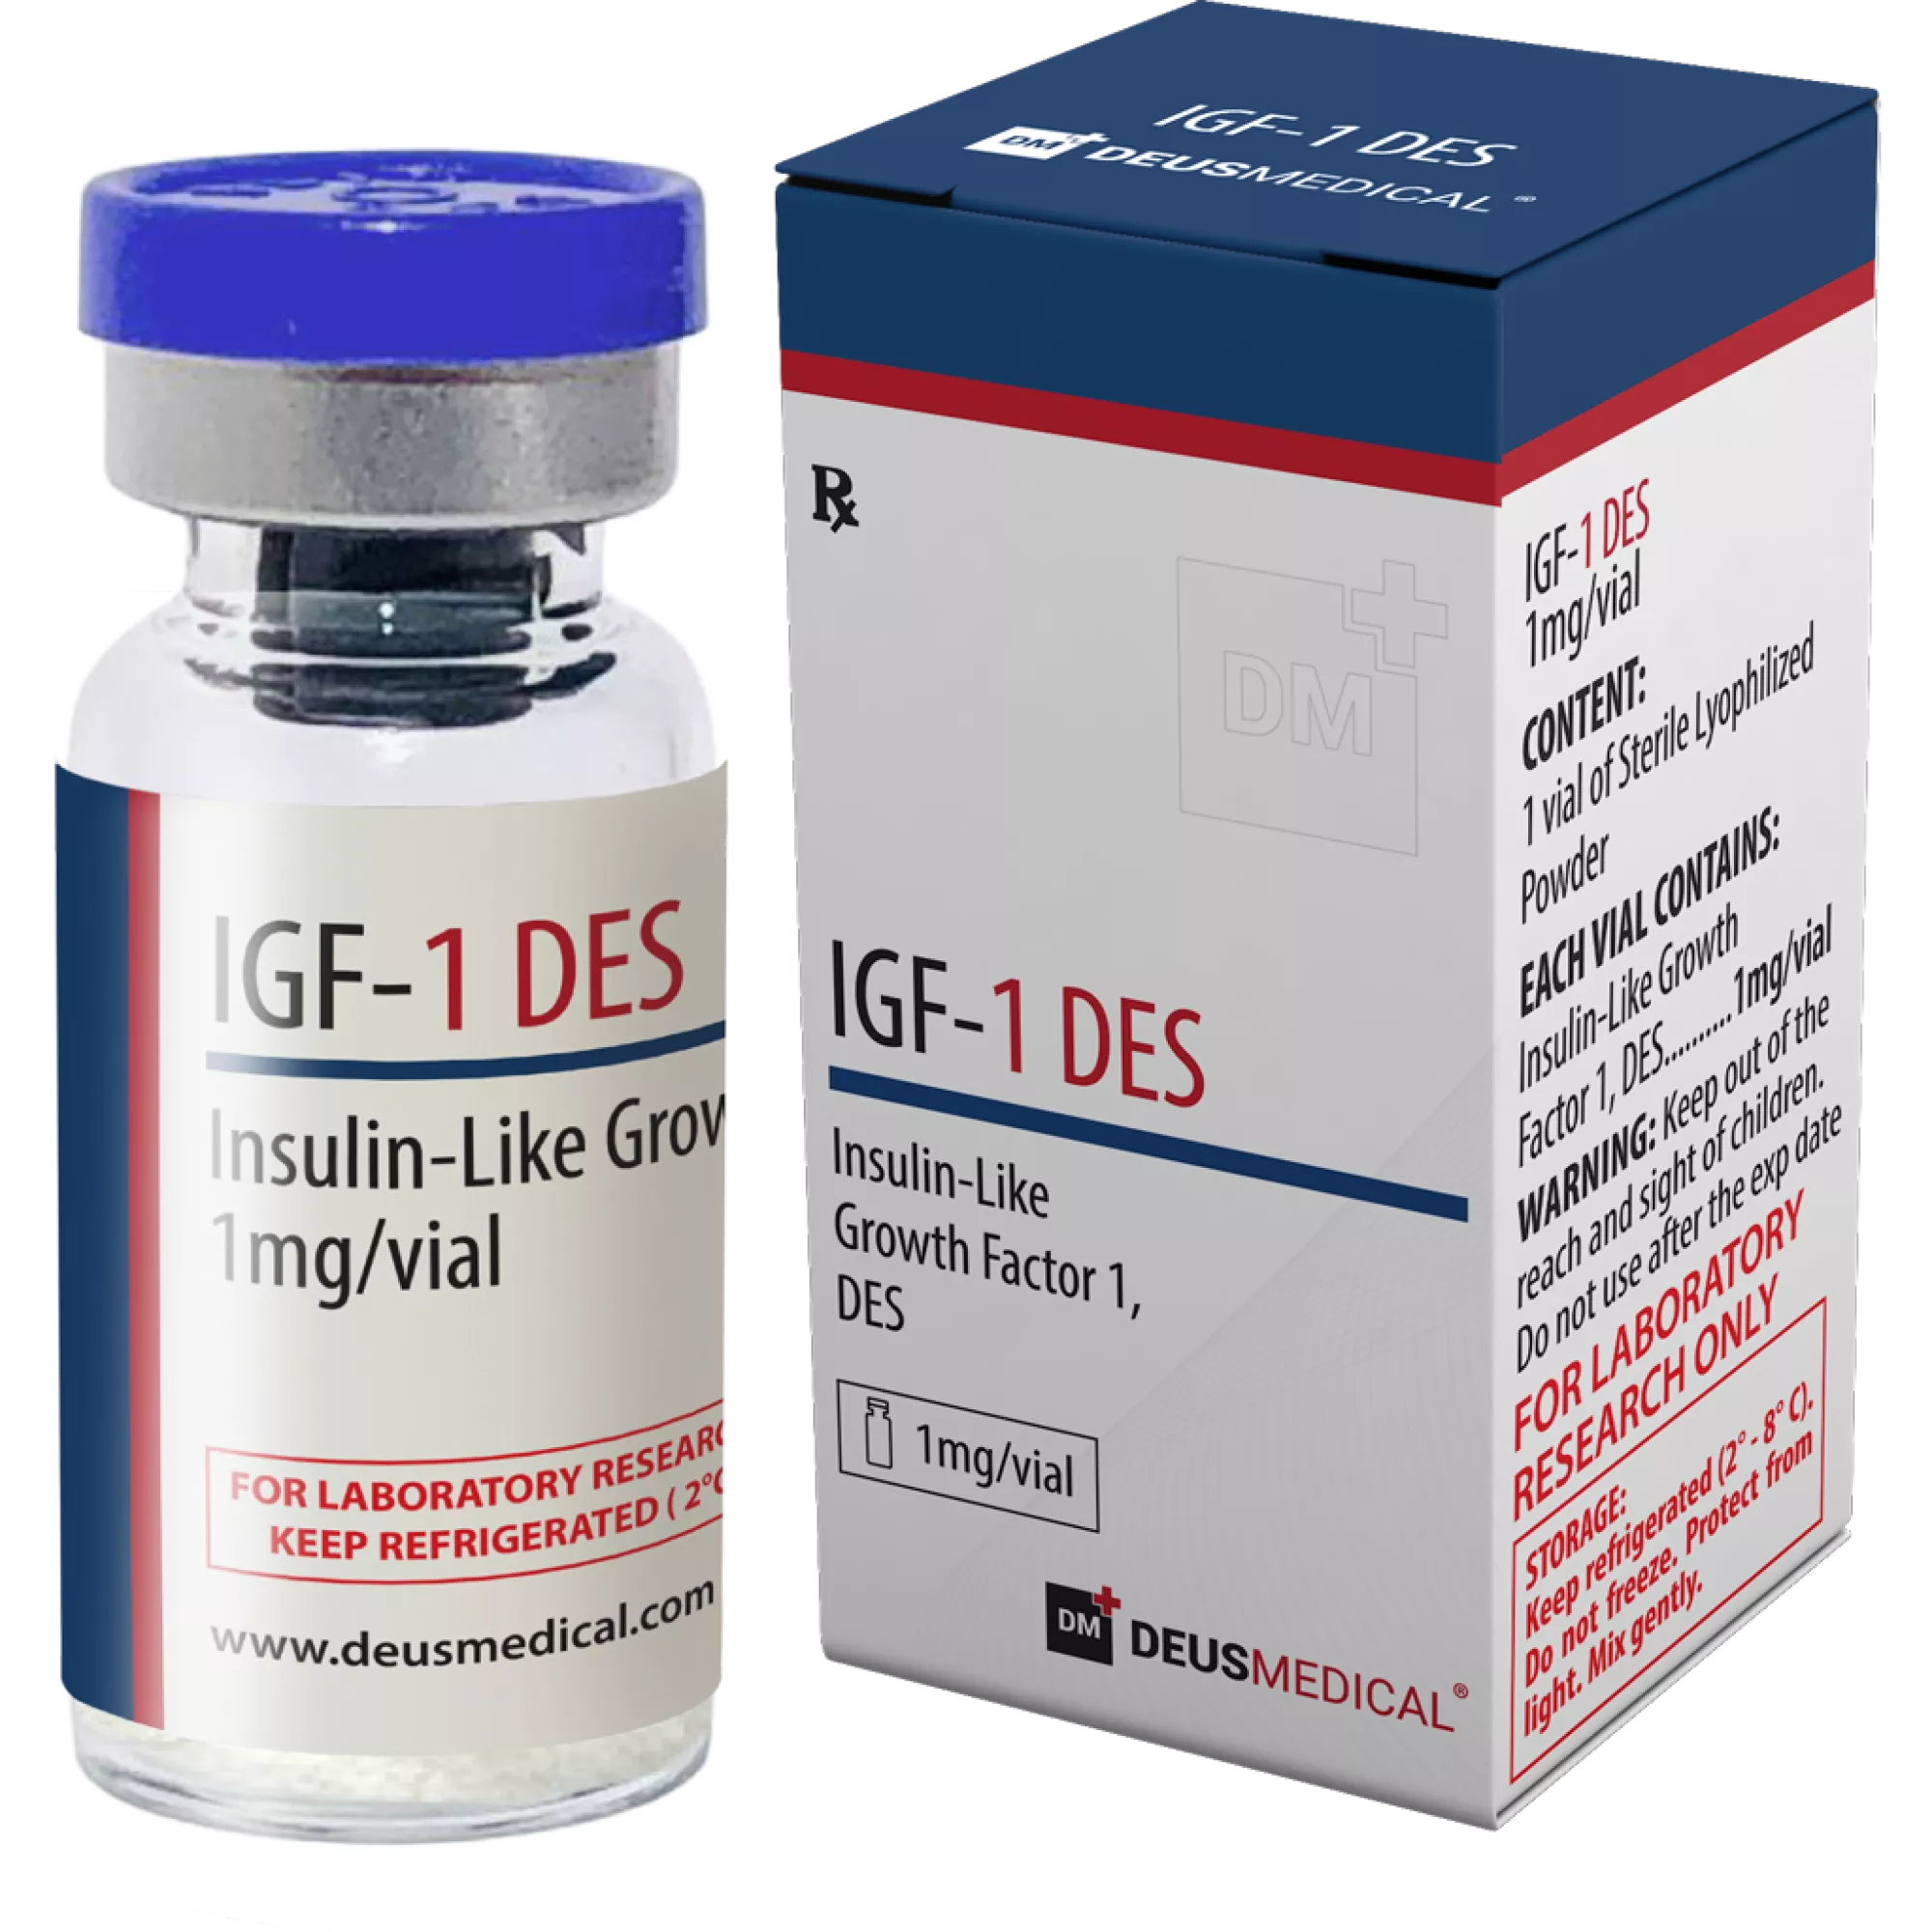 IGF-1 DES (Insulin-Like Growth Factor 1, DES), Deus Medical, Buy Steroids Online - www.deuspower.shop